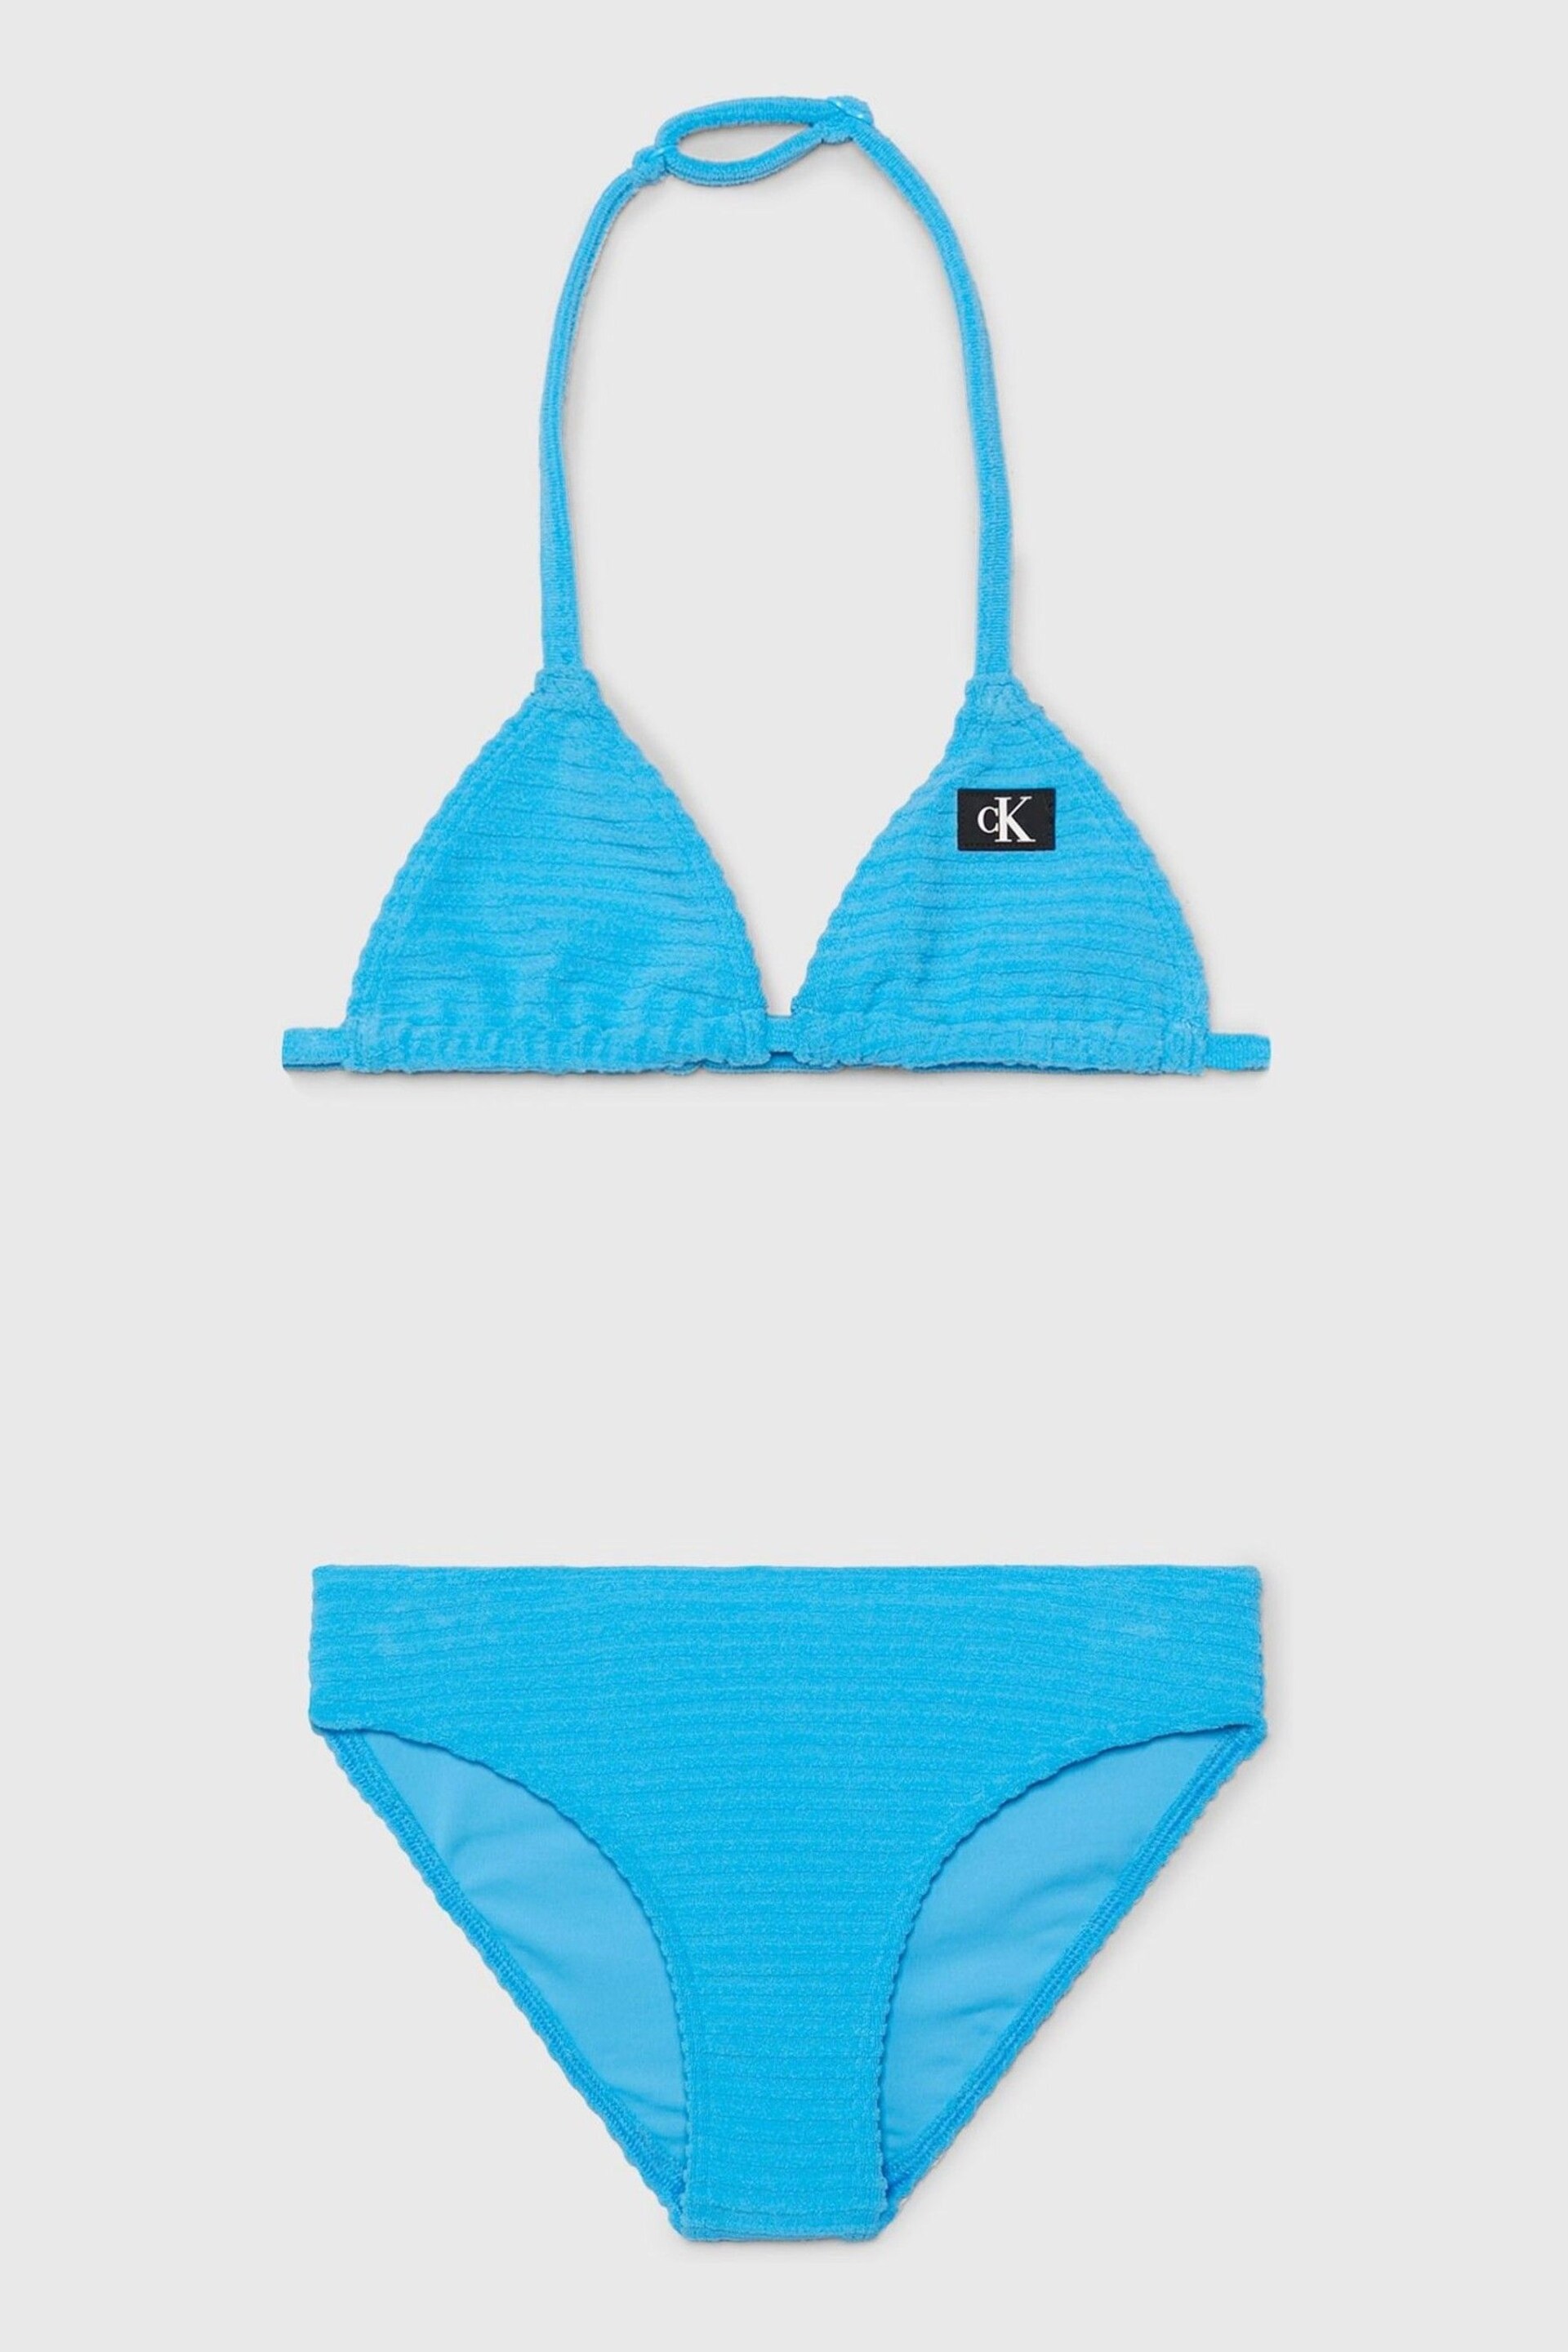 Calvin Klein Blue Triangle Bikini Set - Image 1 of 2